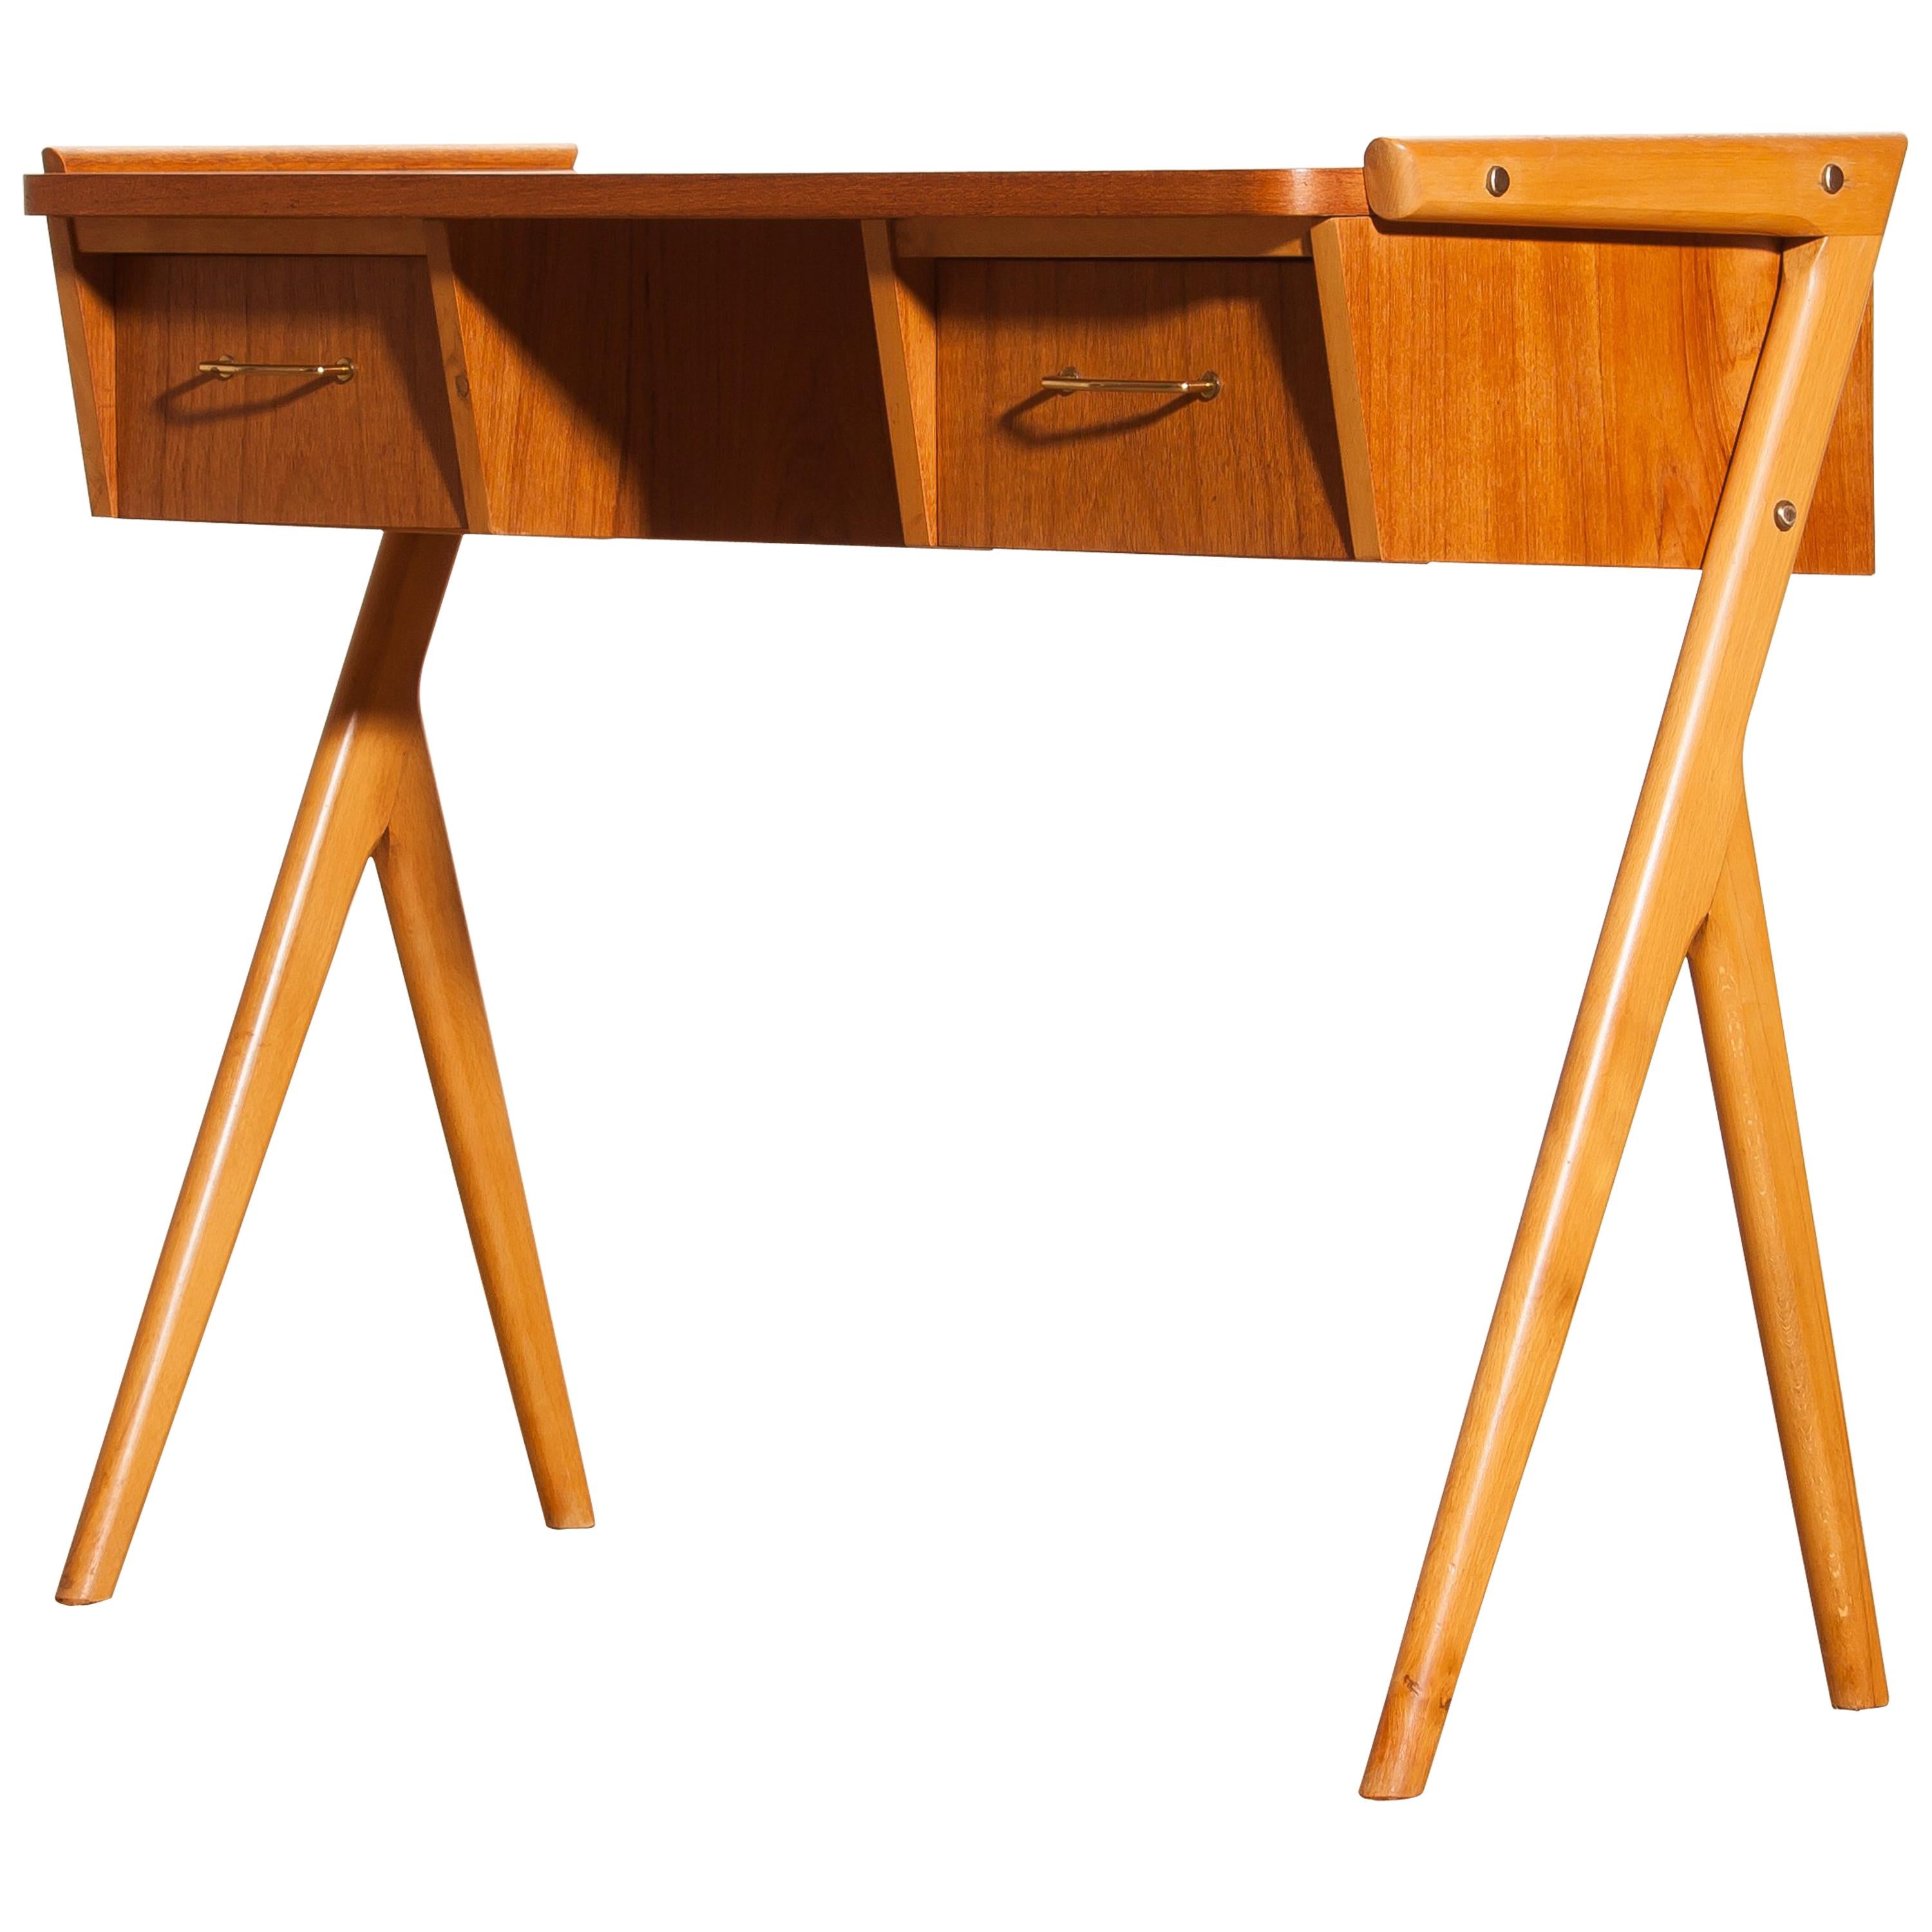 1950s, Teak Swedish Side Table or Ladies Desk